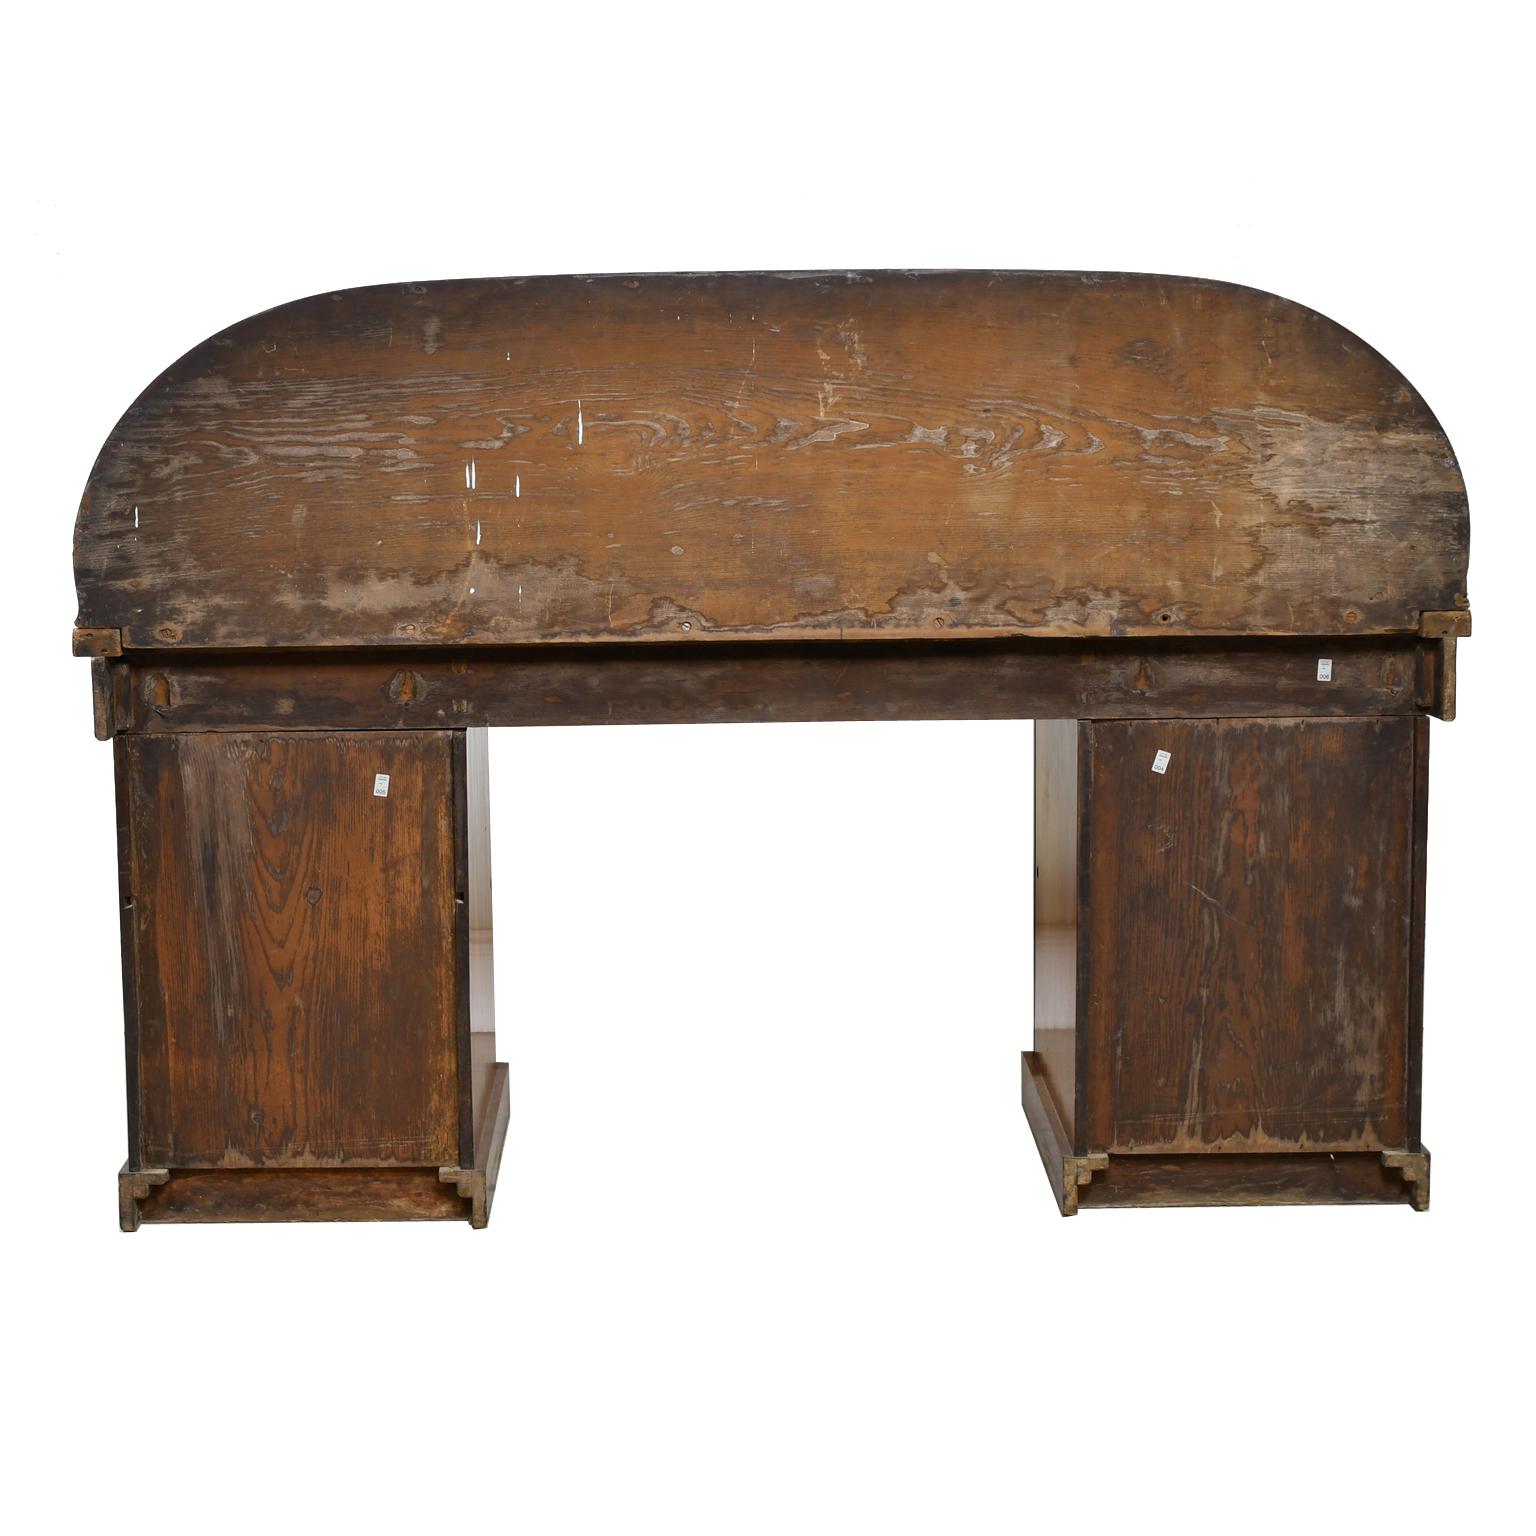 English Victorian Pedestal Base Sideboard in Mahogany, circa 1850 For Sale 1